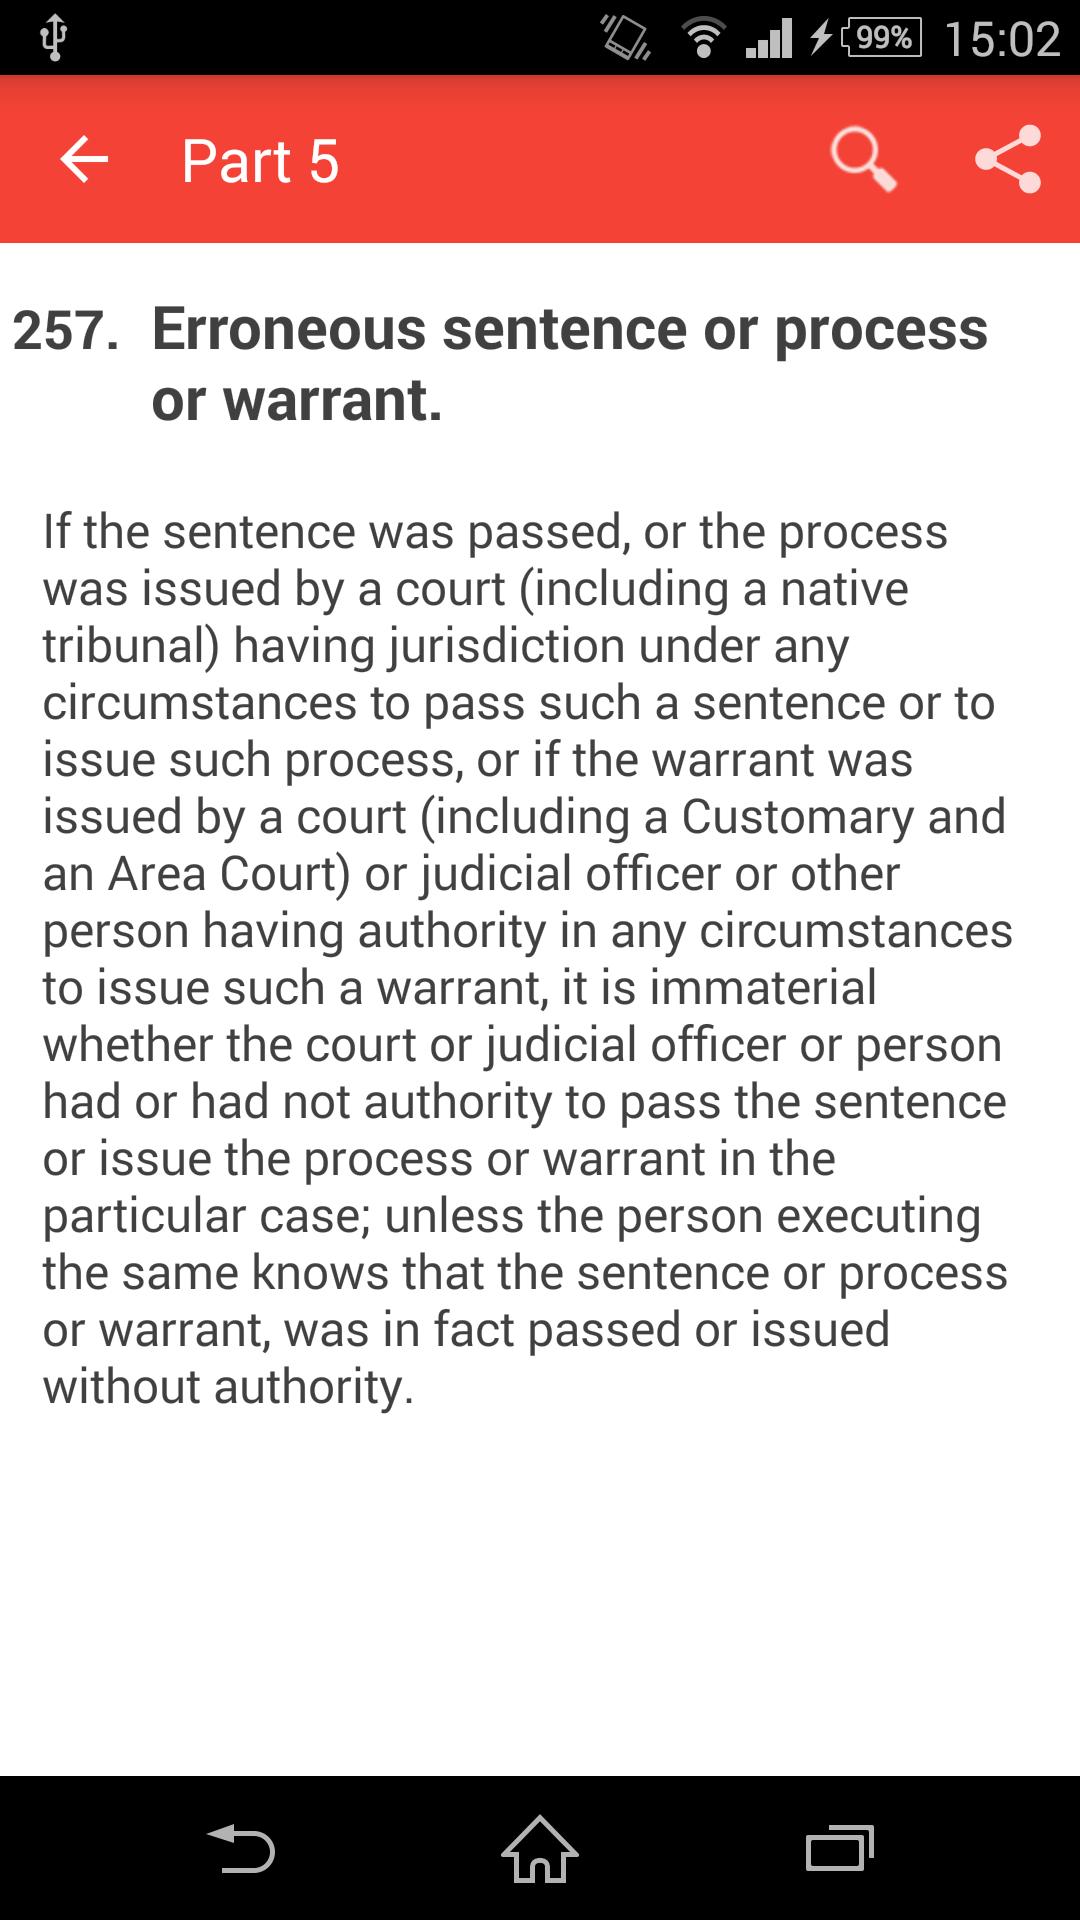 Sentence processing